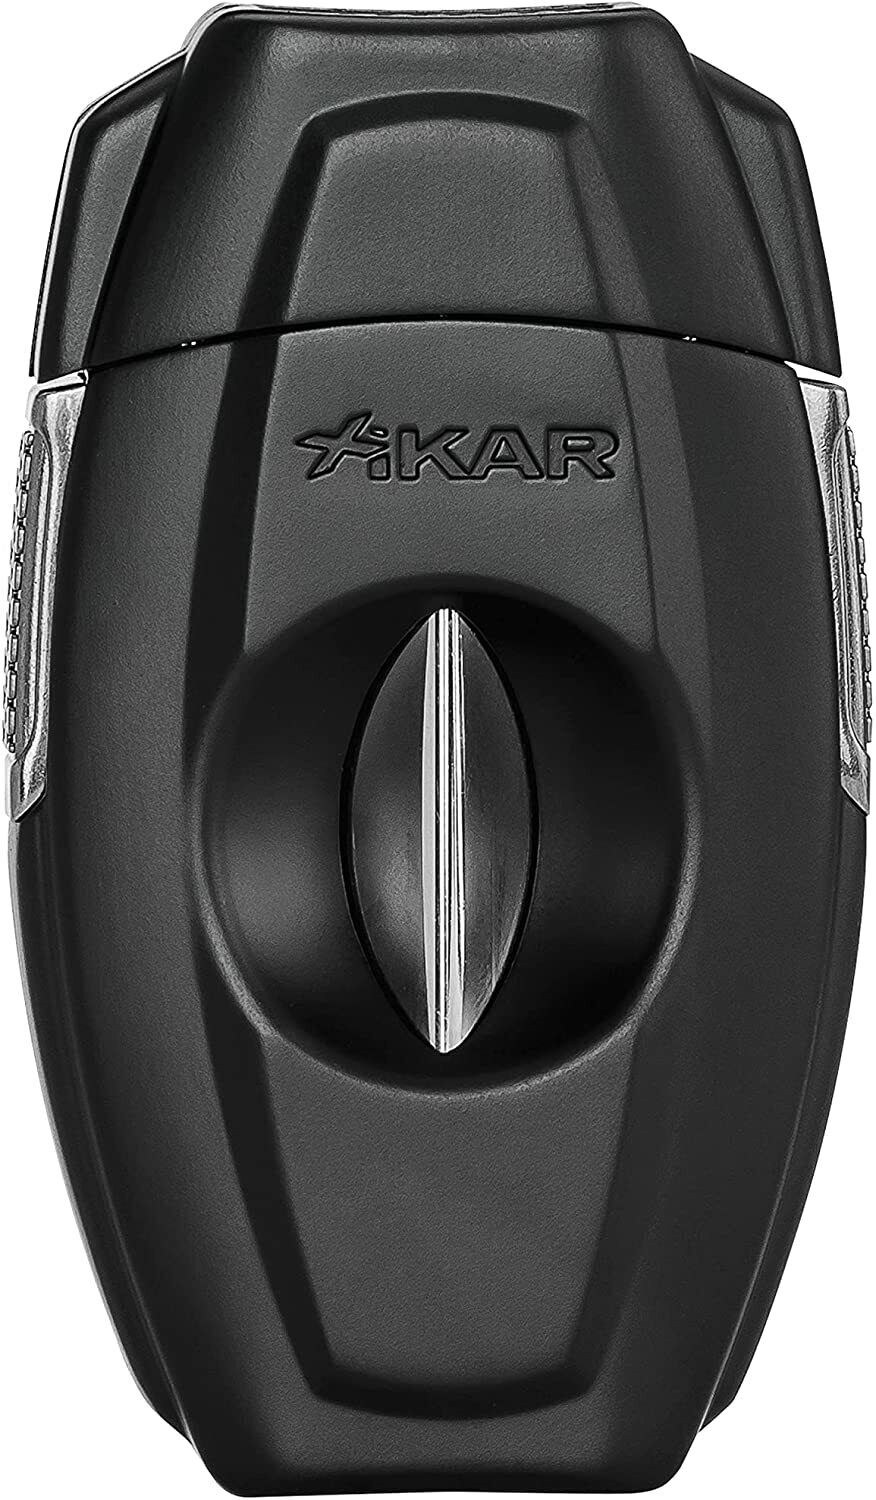 Xikar VX2 V-Cut Cigar Cutter, Spring-Loaded, Black, Lifetime Warranty